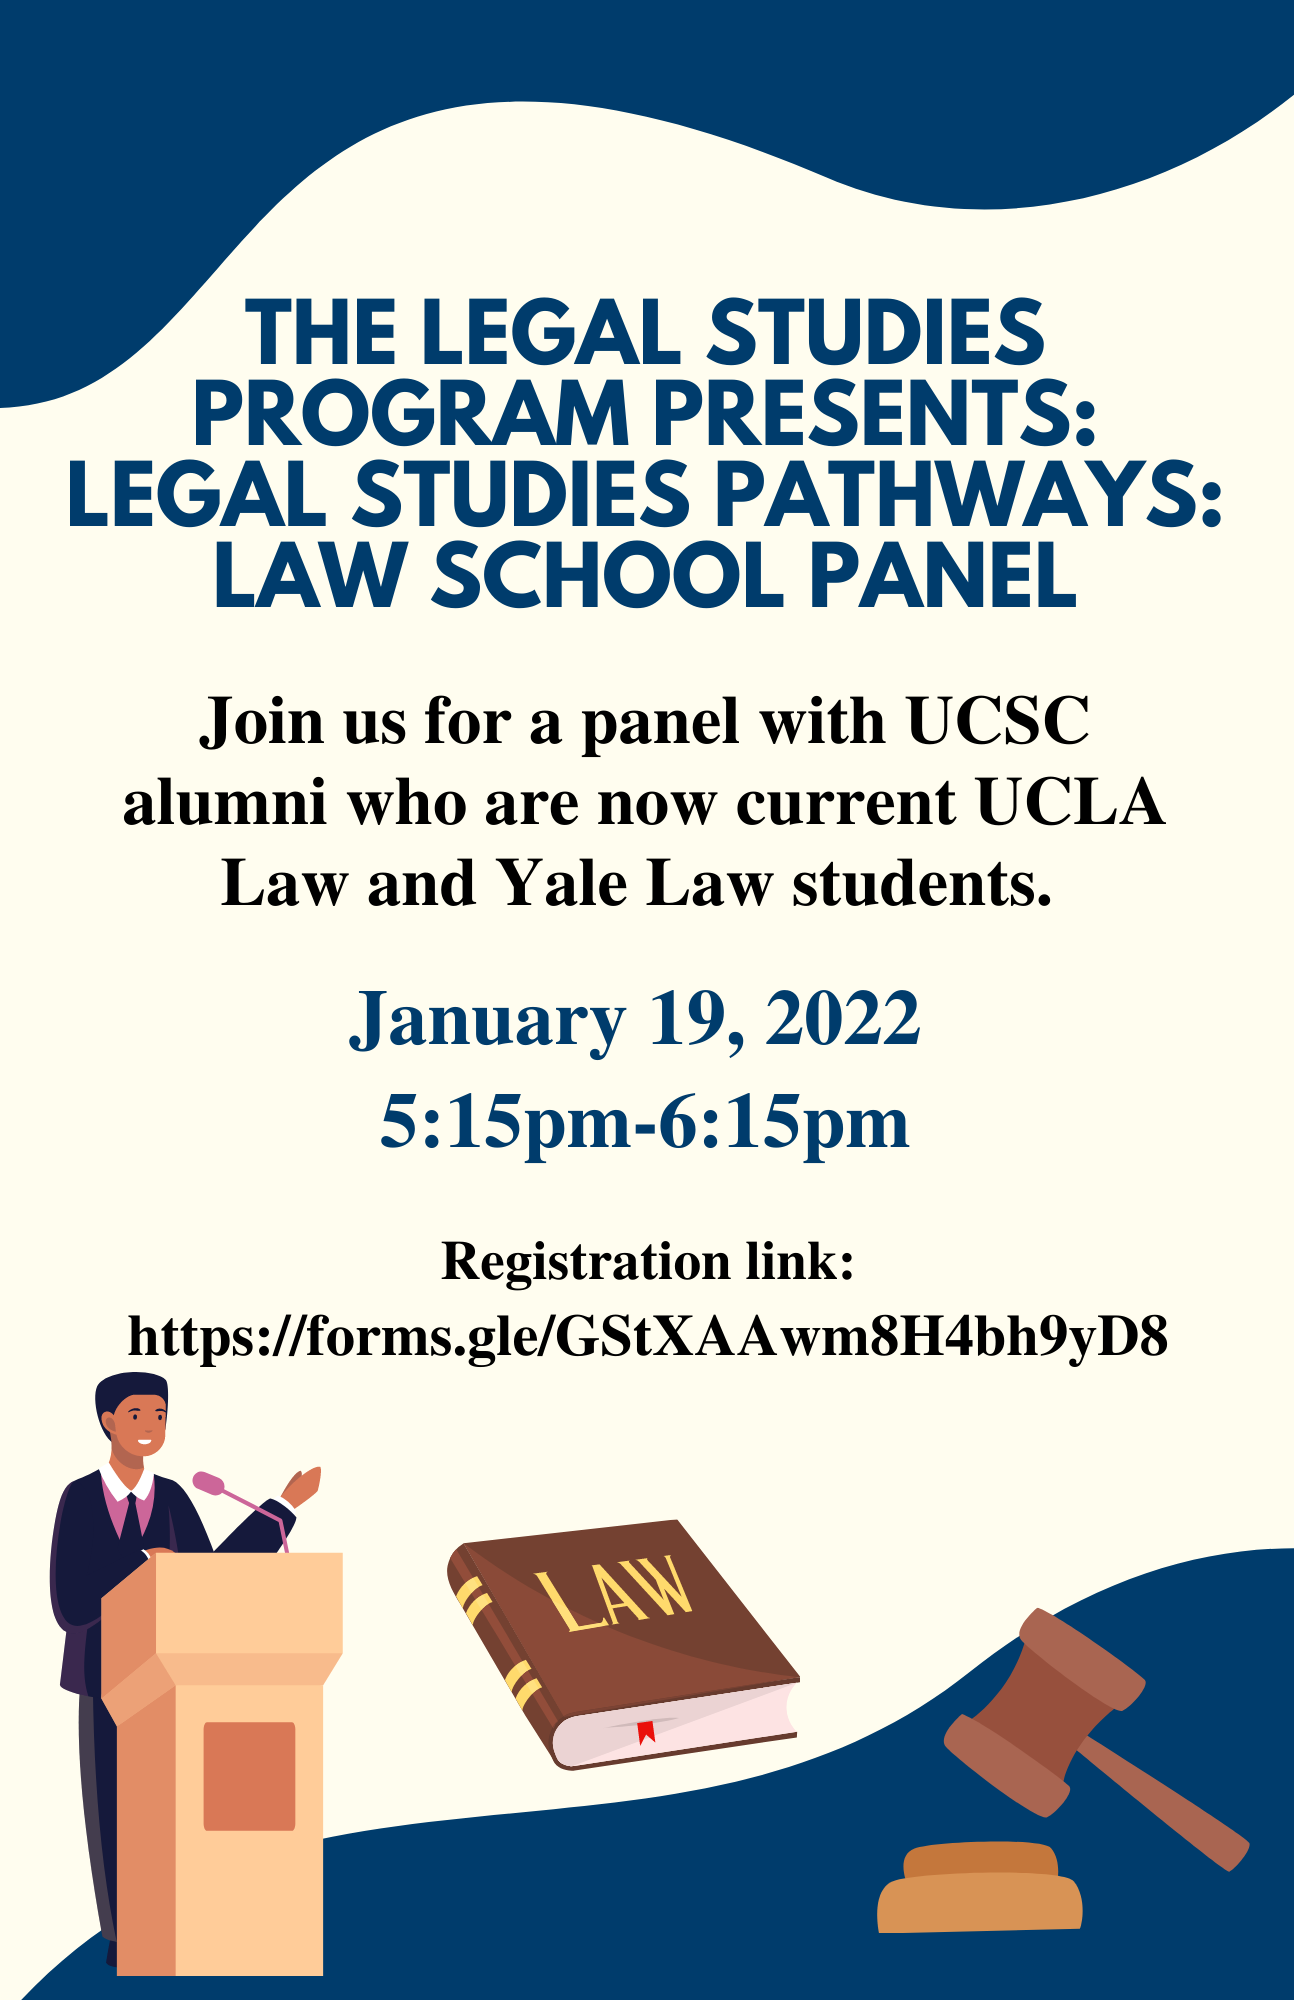 law-school-panel-3.png